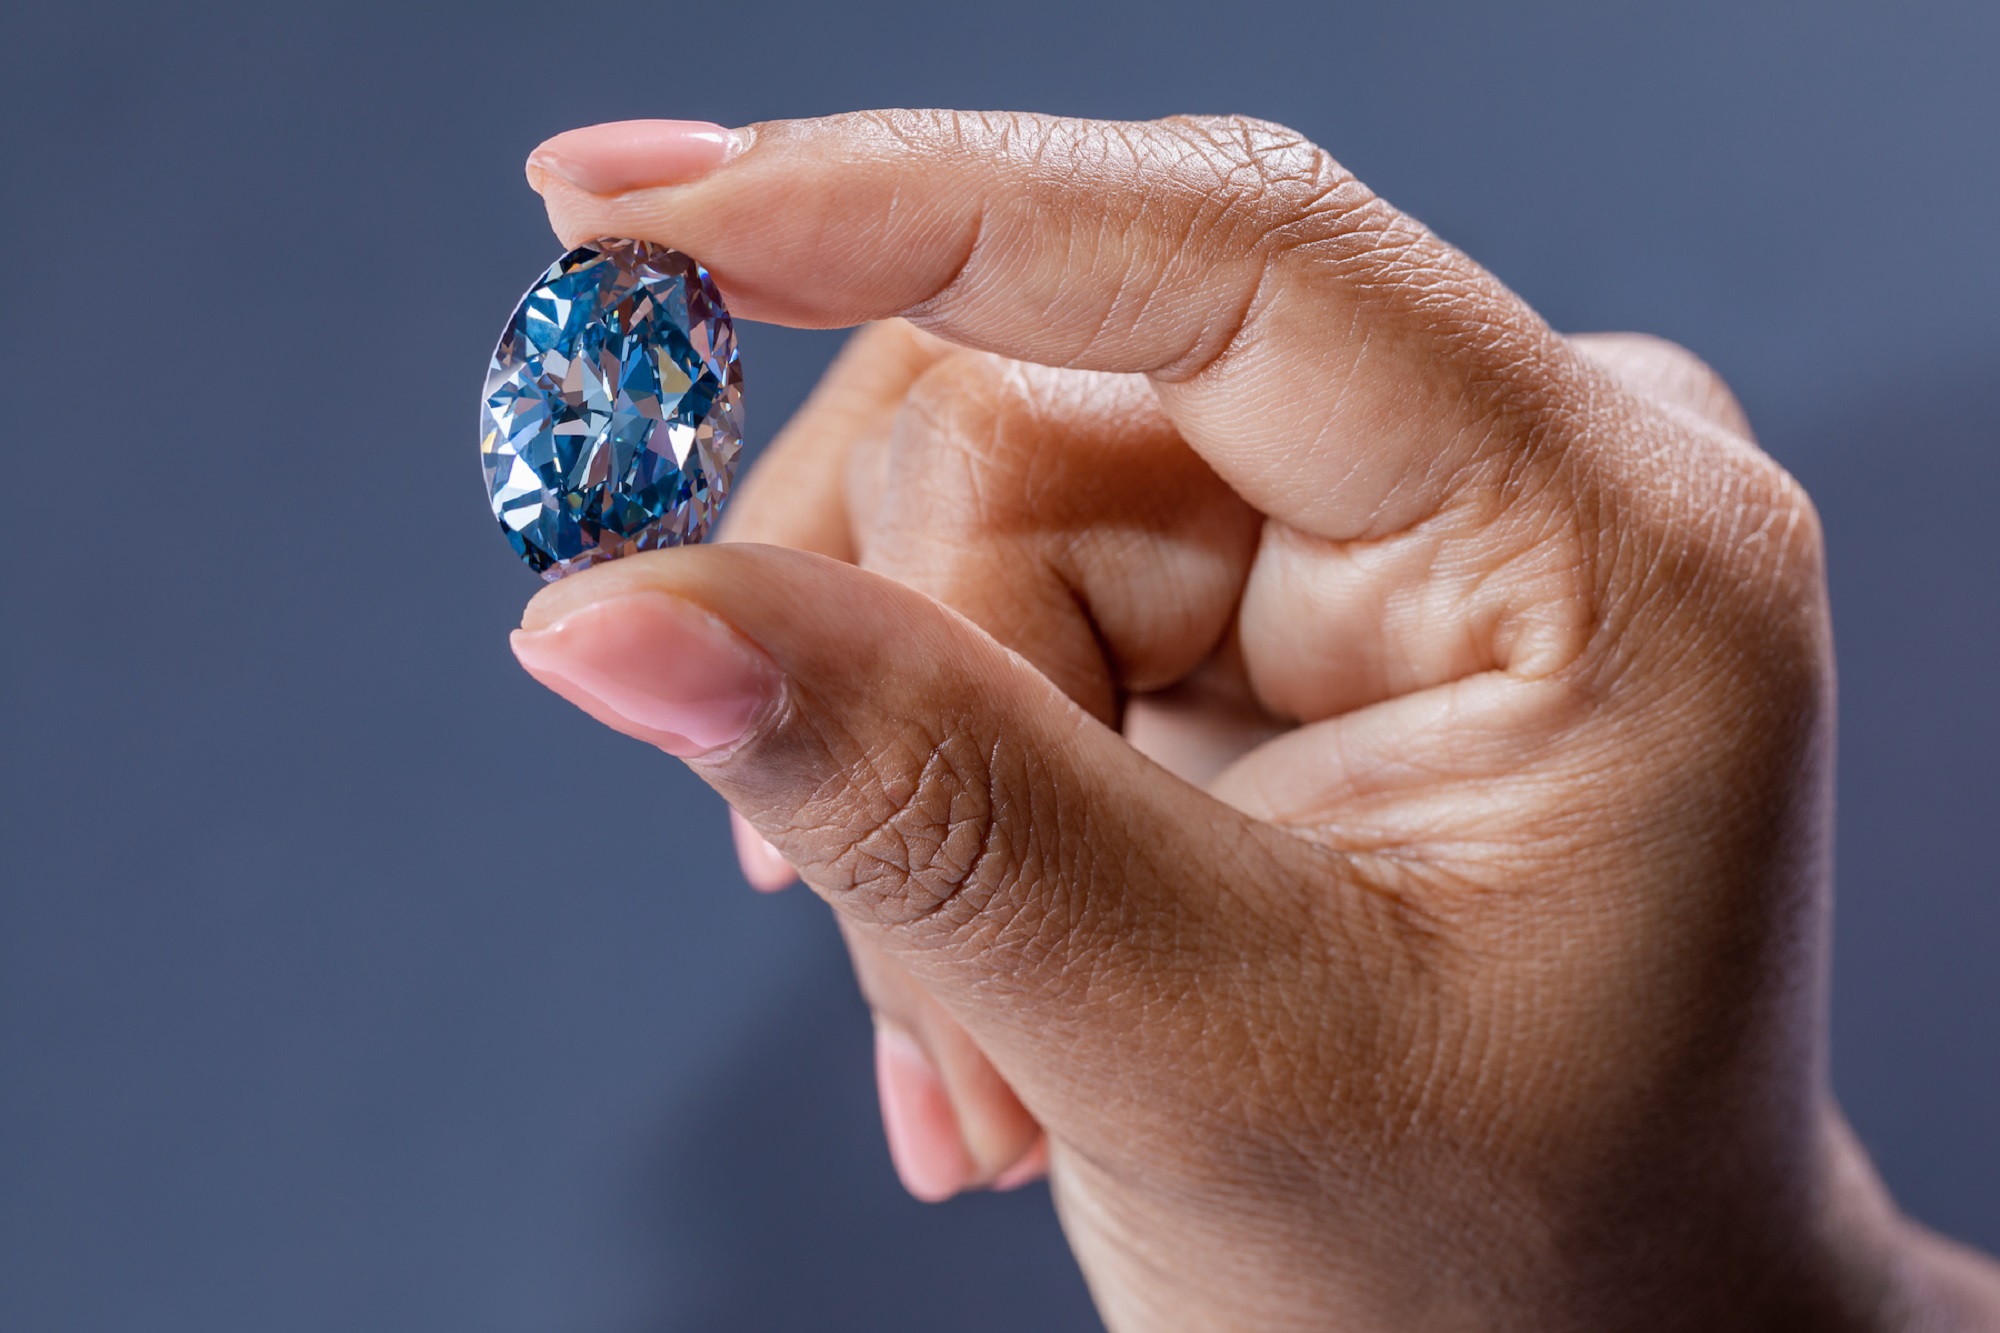  blue diamond on display in New York City | Popular Science